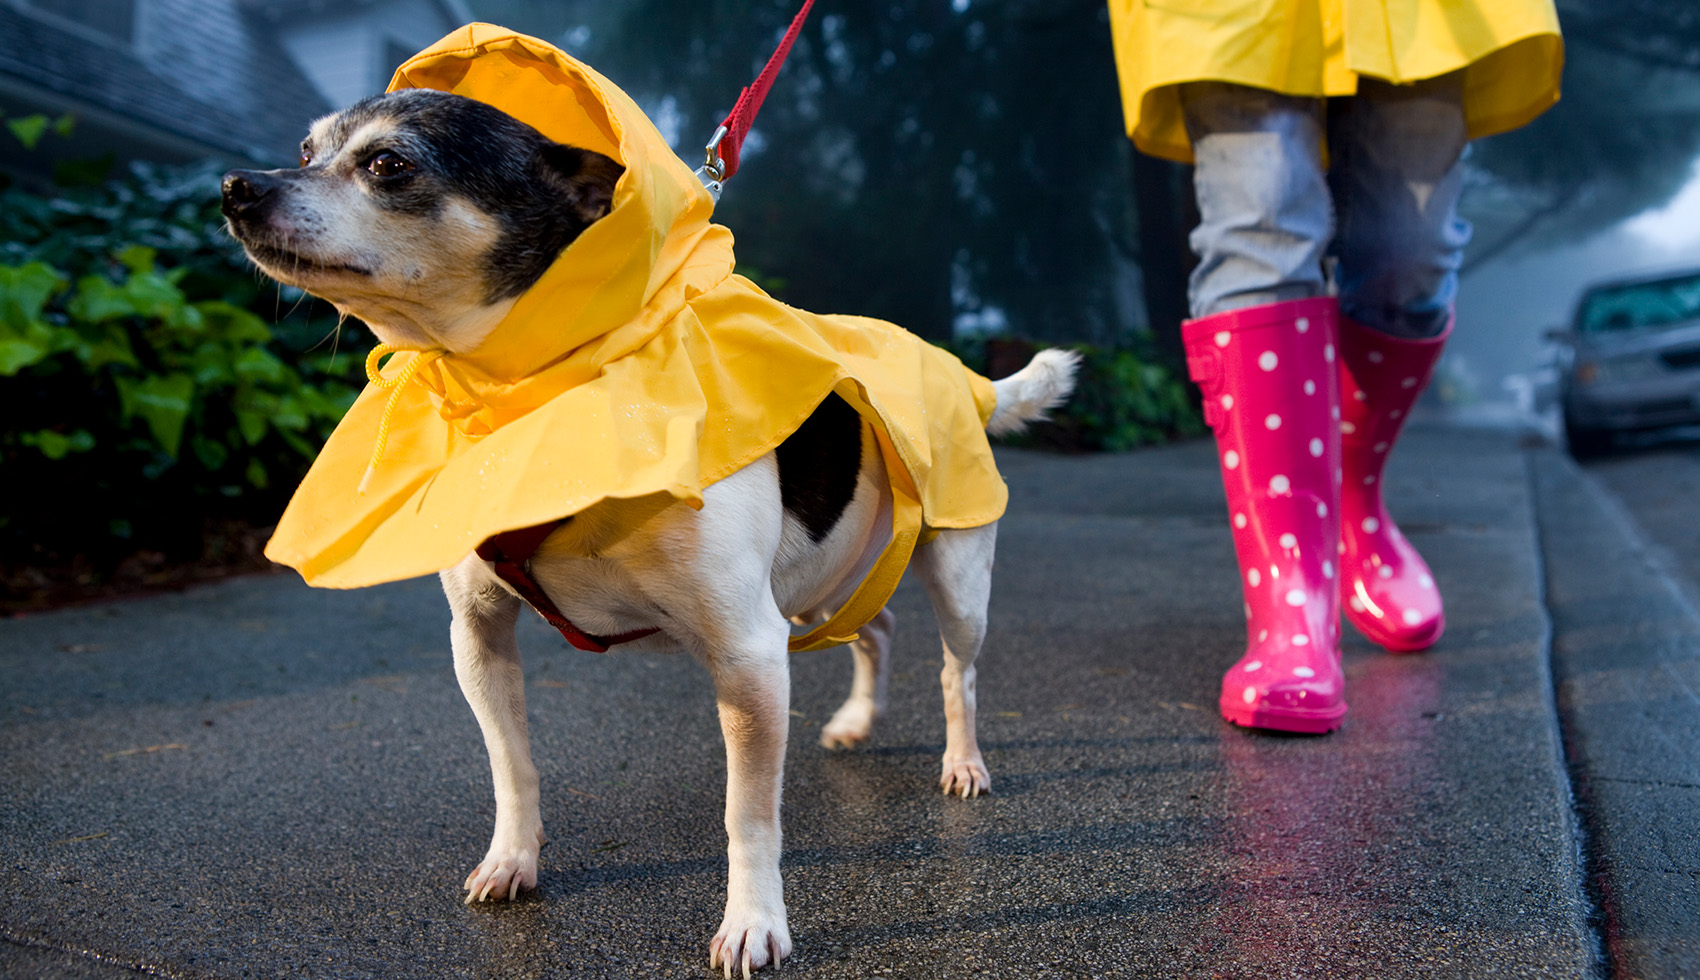 Walking a dog with a rain coat